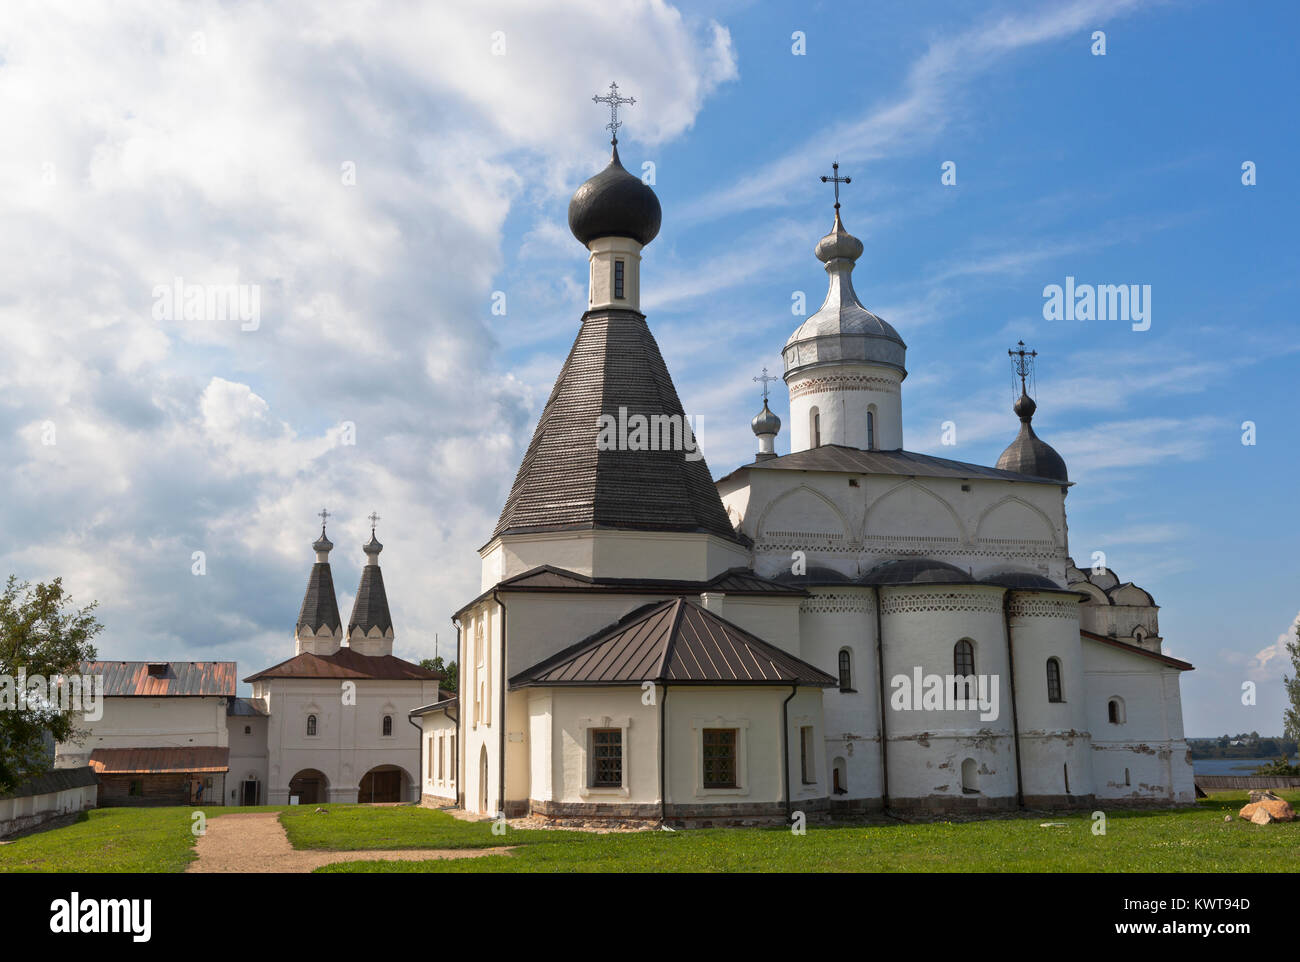 Ferapontovo, Vologda region, Russia - August 9, 2015: Churches of the Ferapontov Belozersky monastery Stock Photo